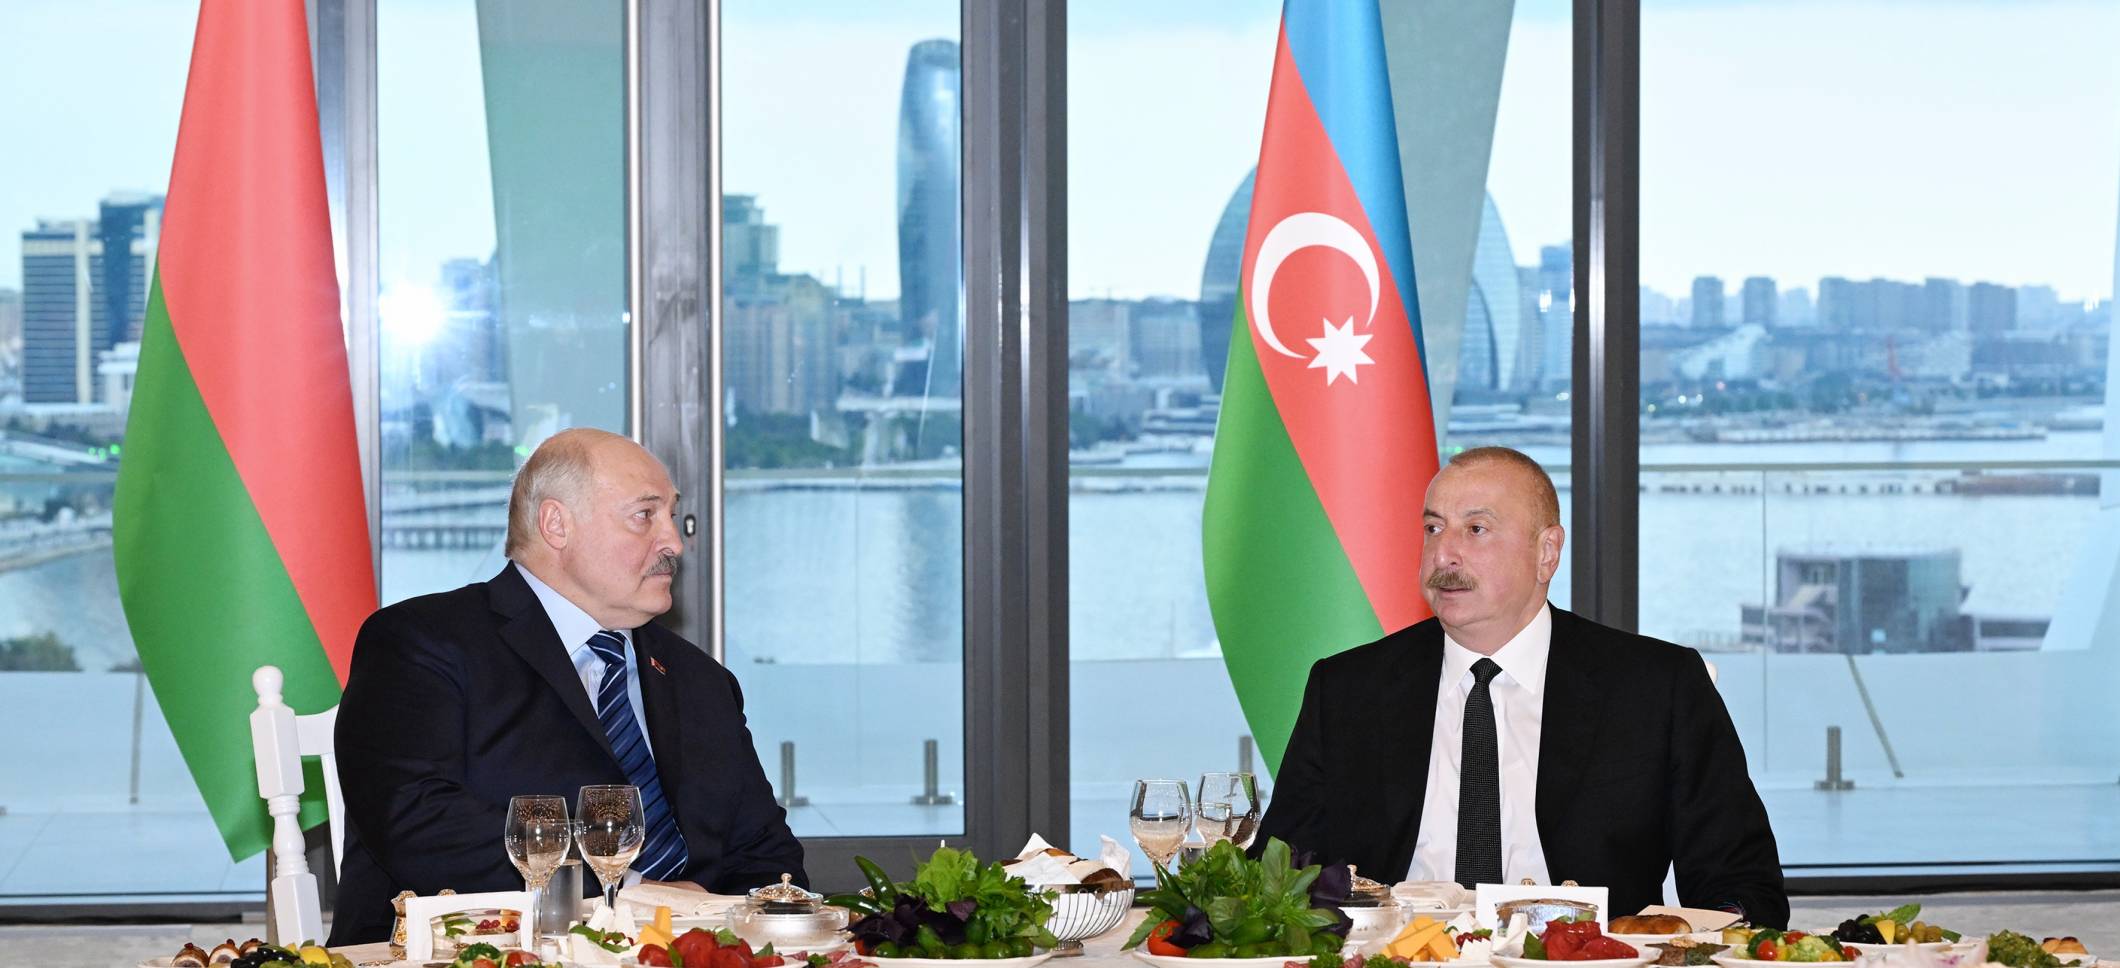 State reception on behalf of President Ilham Aliyev was hosted in honor of President of Belarus Aleksandr Lukashenko at Gulustan Palace